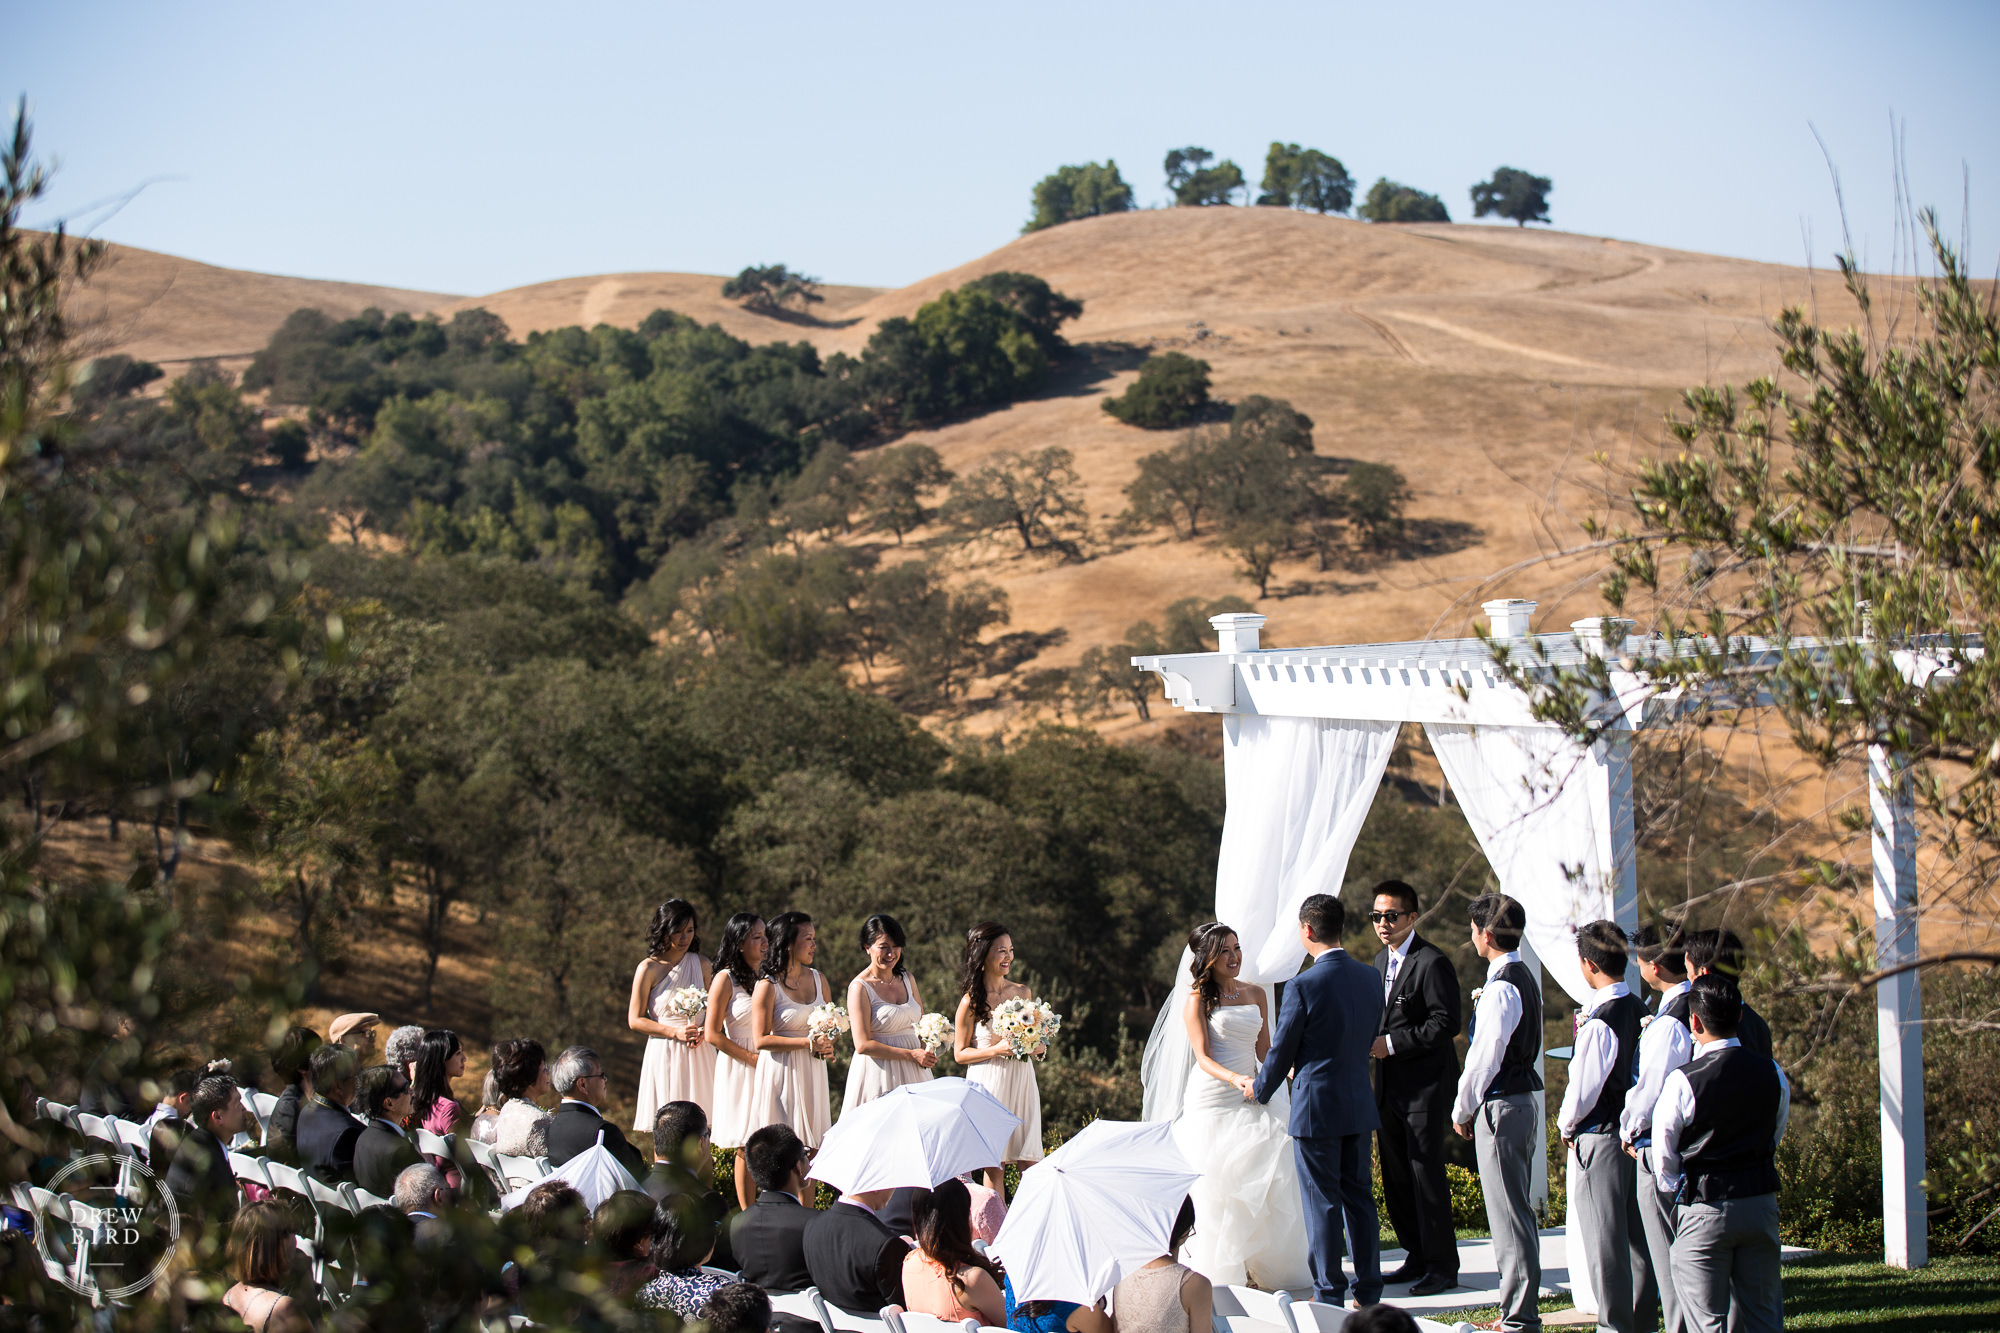 Outdoor wedding ceremony. Willow Heights Mansion wedding venue in Morgan Hill, California.